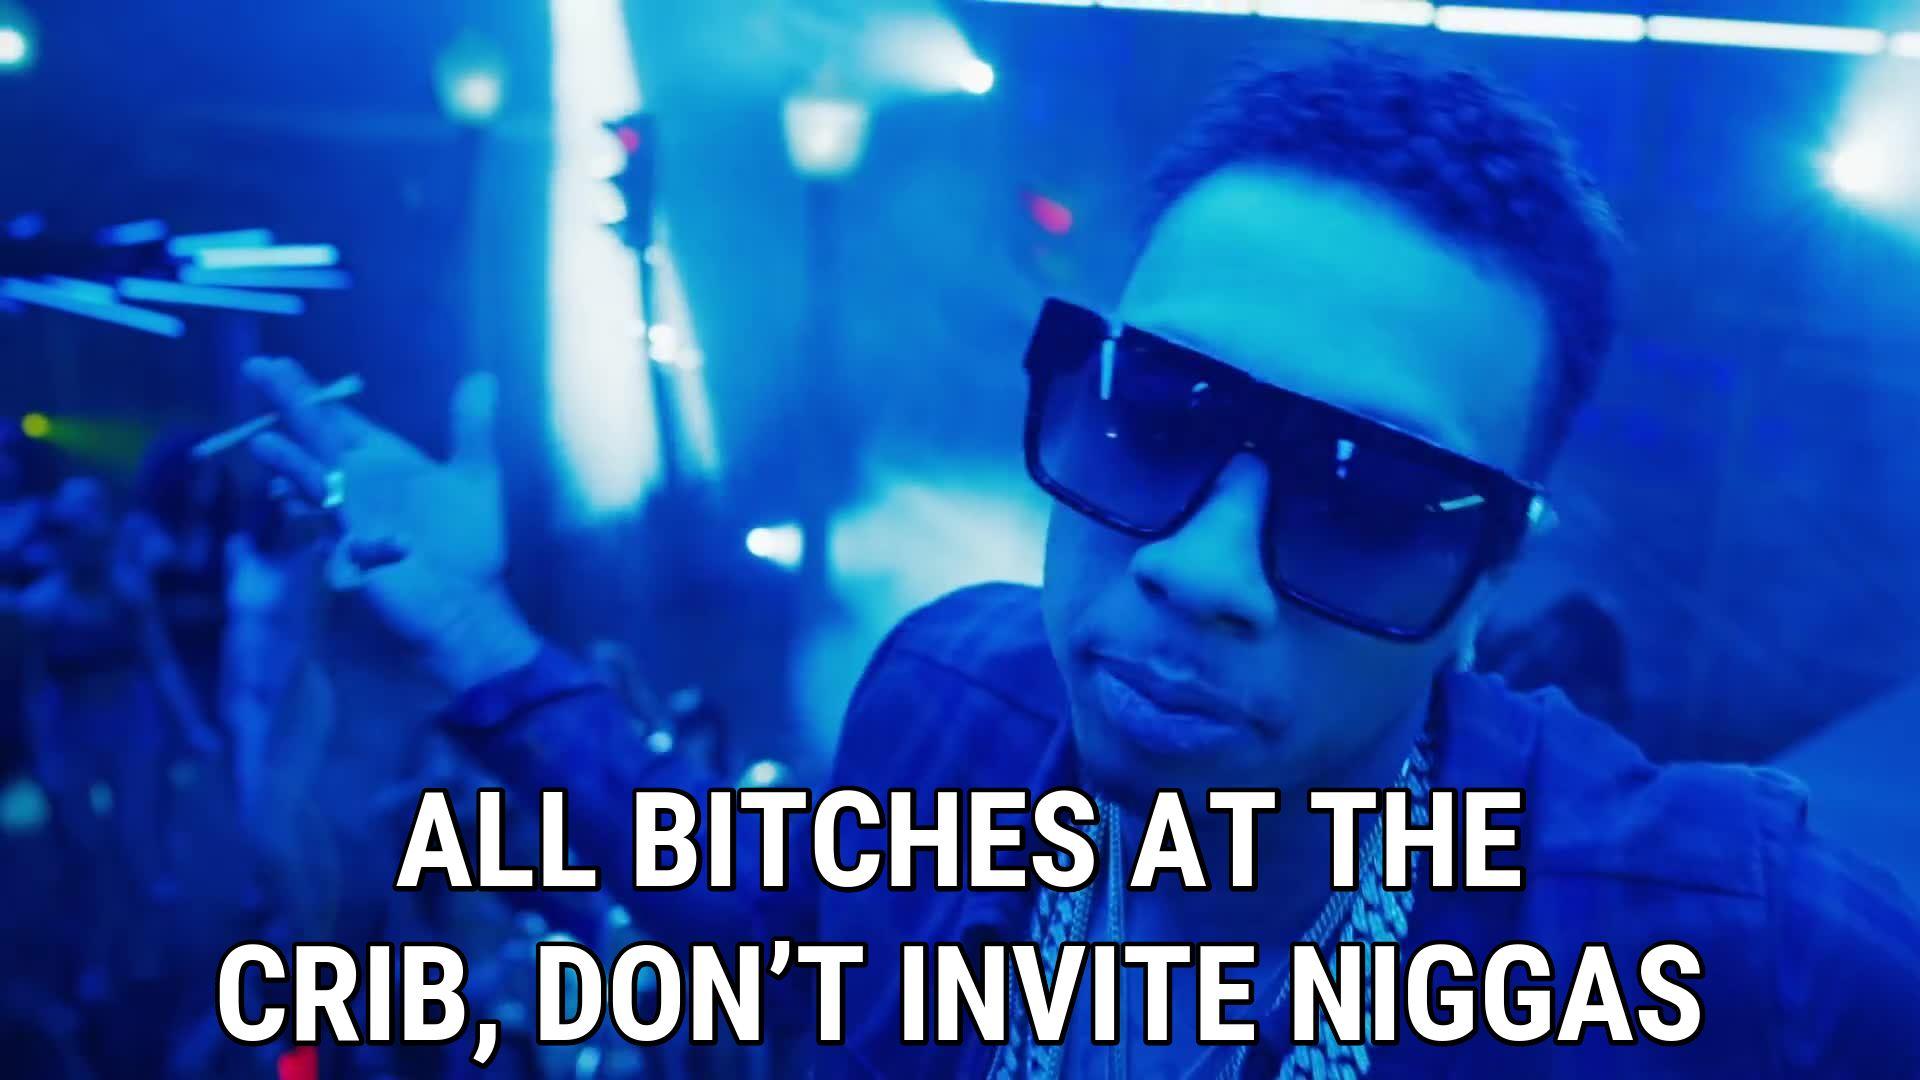 Bitches N Marijuana lyrics Chris Brown & Tyga song in image